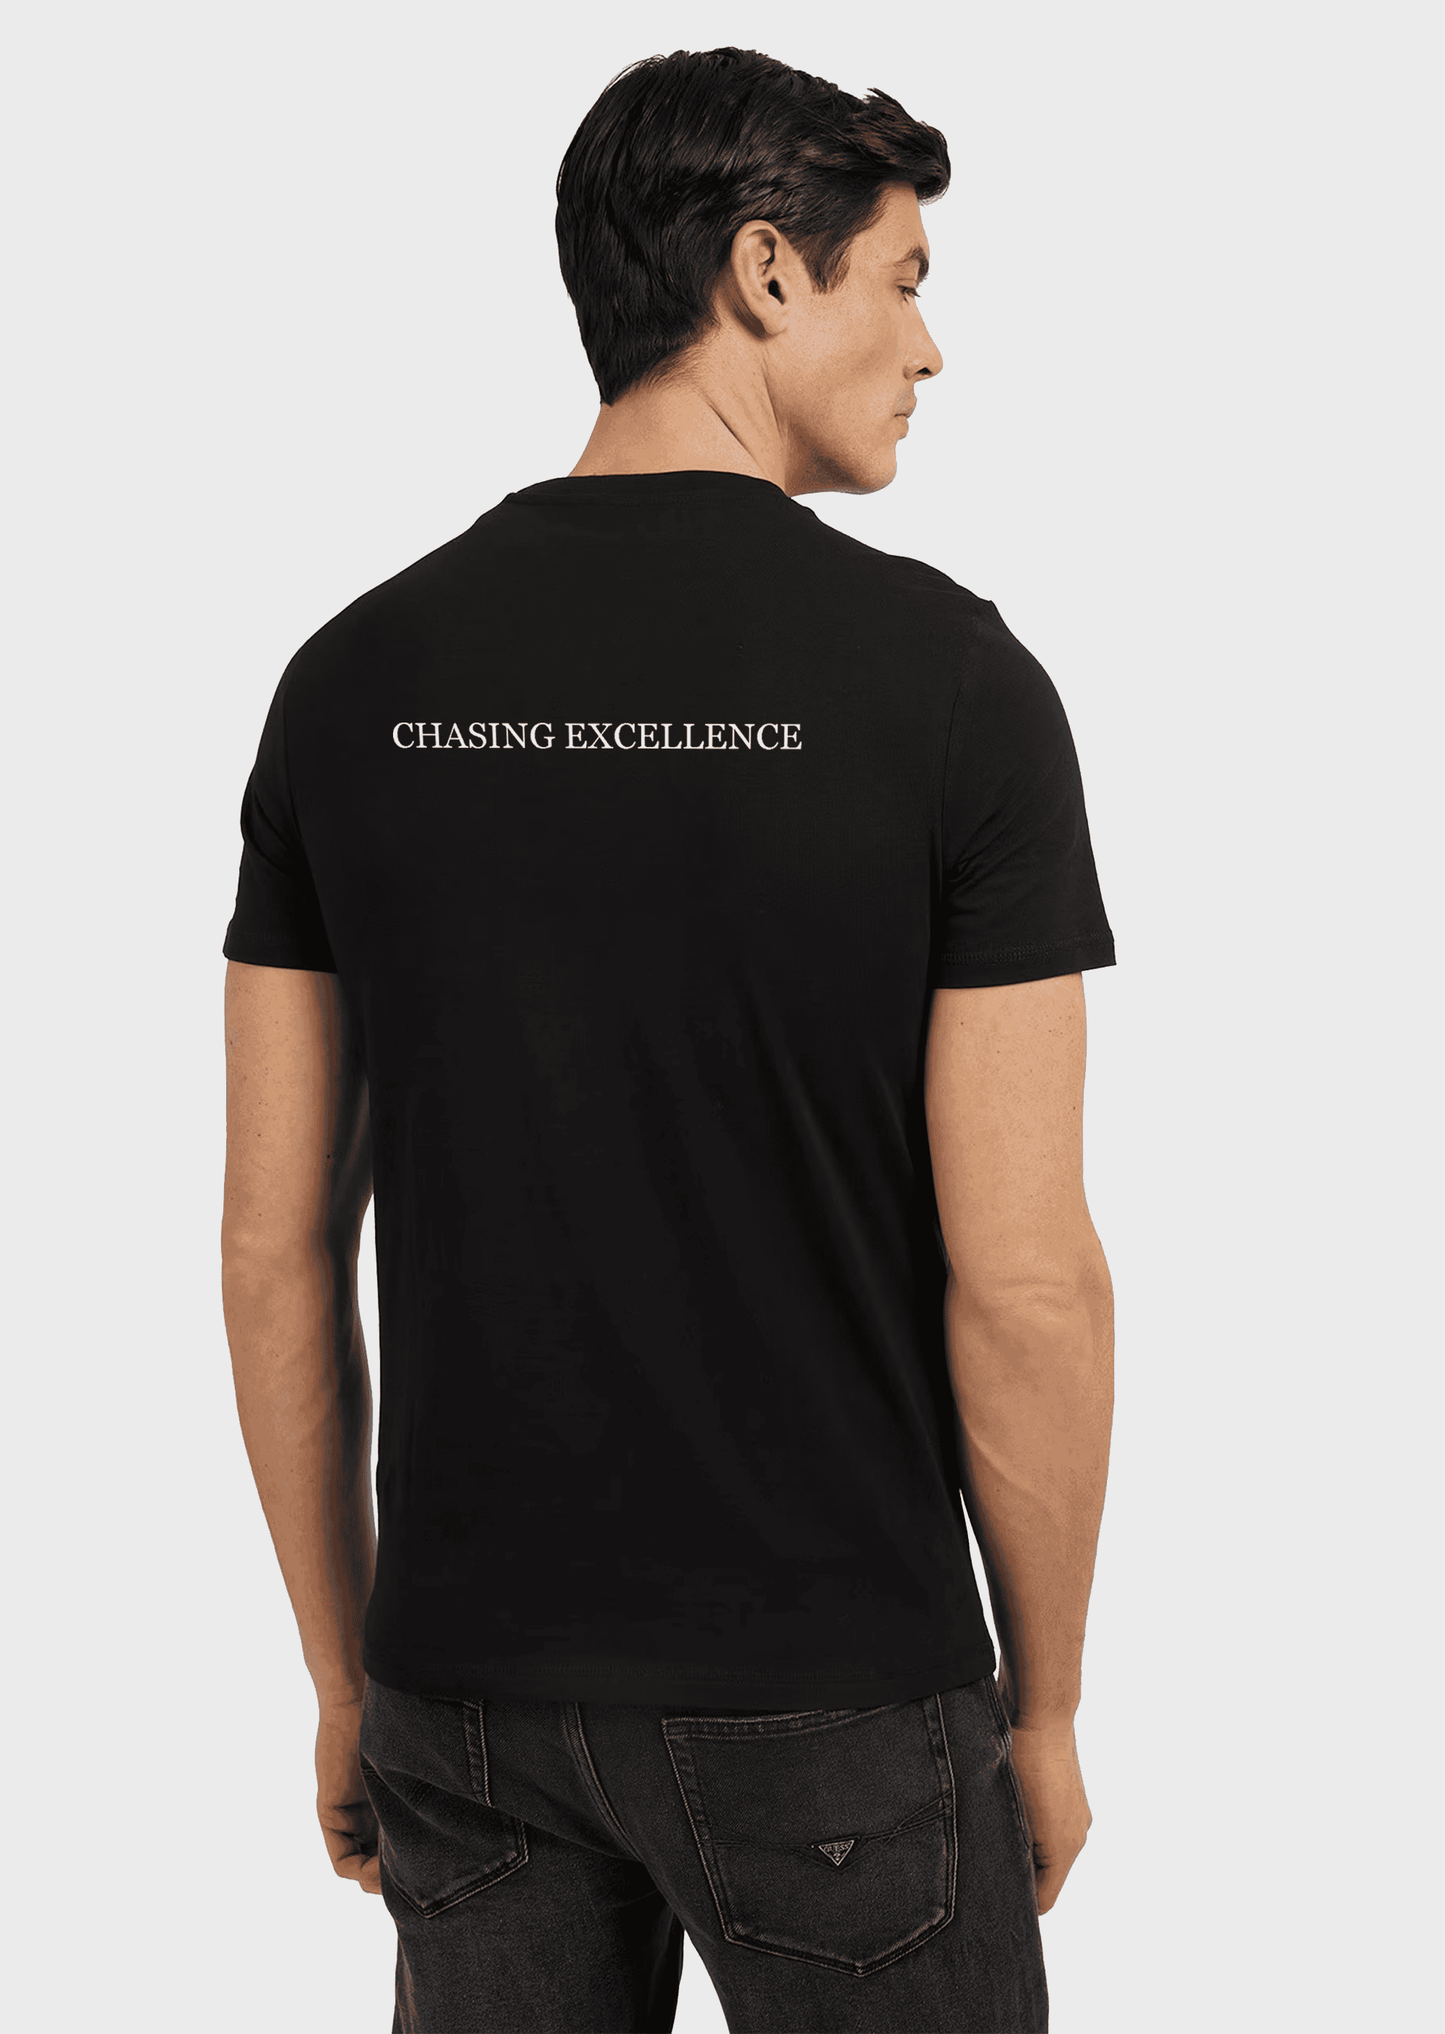 The Virtus T-Shirt – Apparel Virtus Store